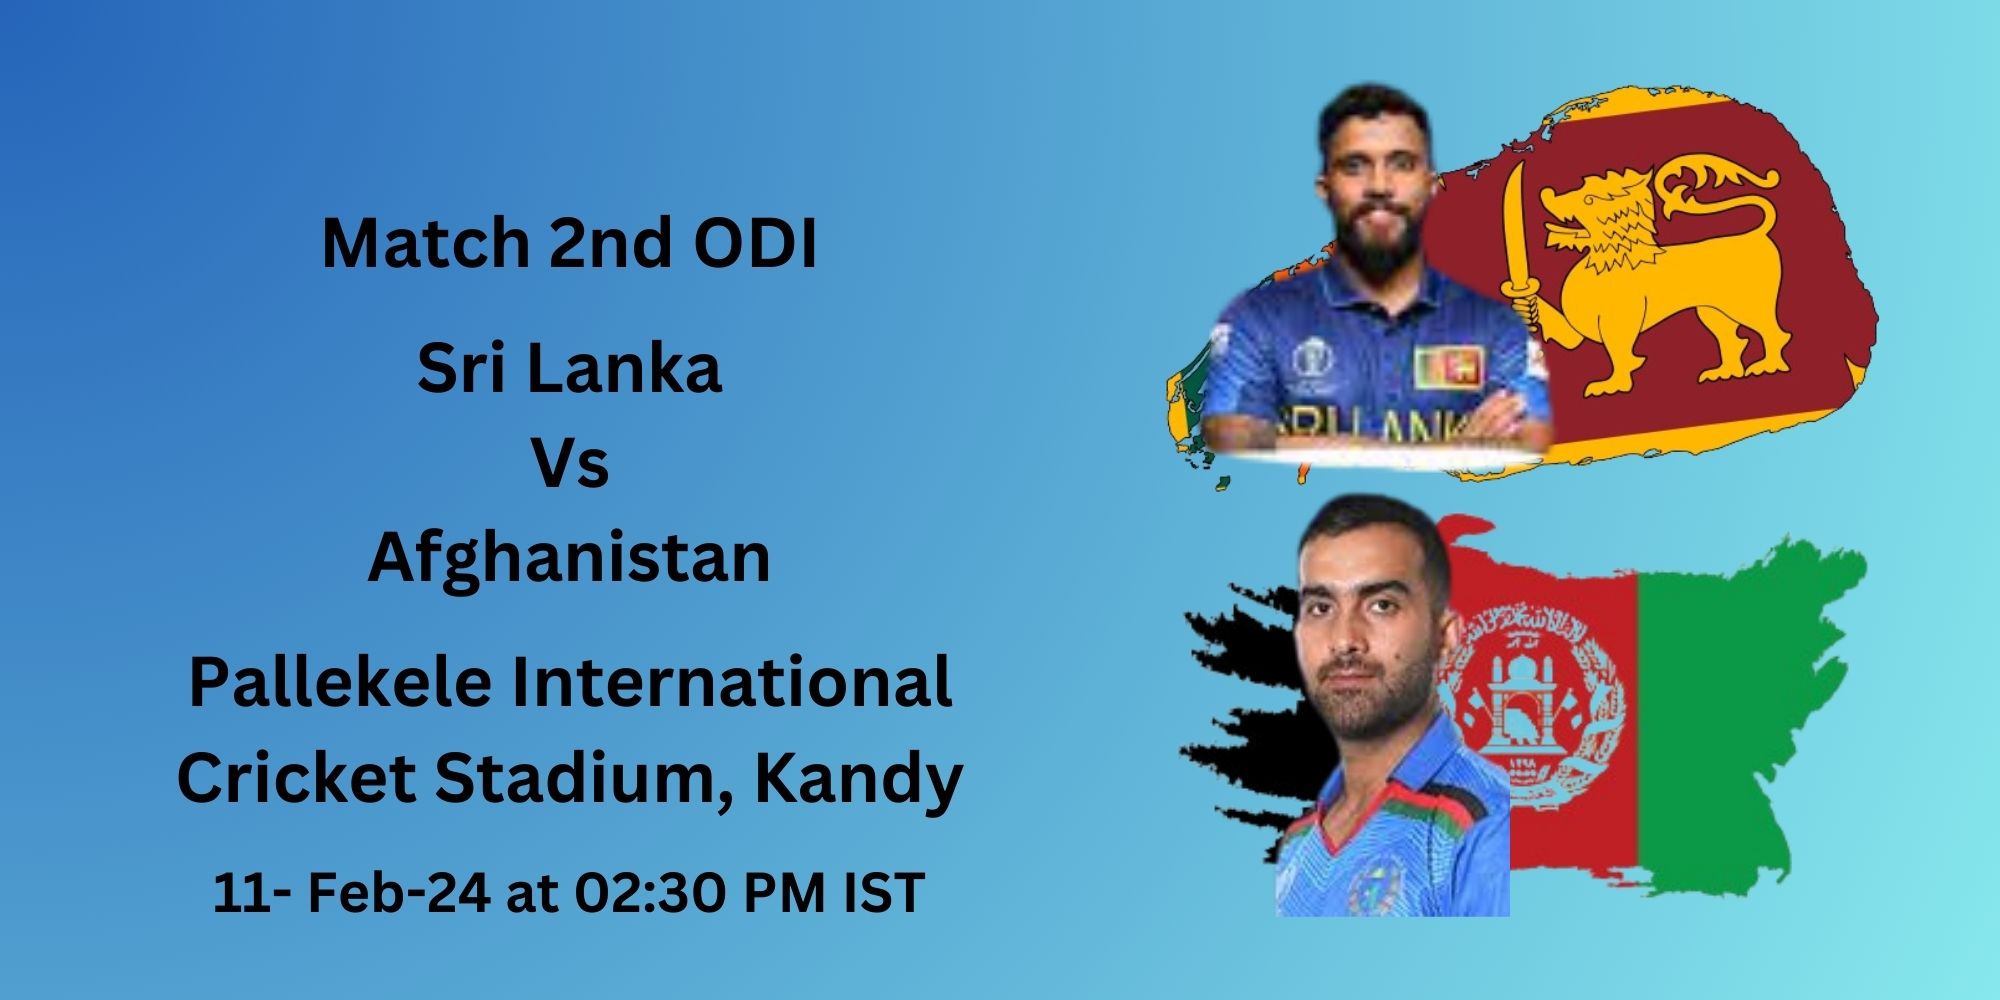 Sri Lanka Vs Afghanistan, 2nd ODI Match